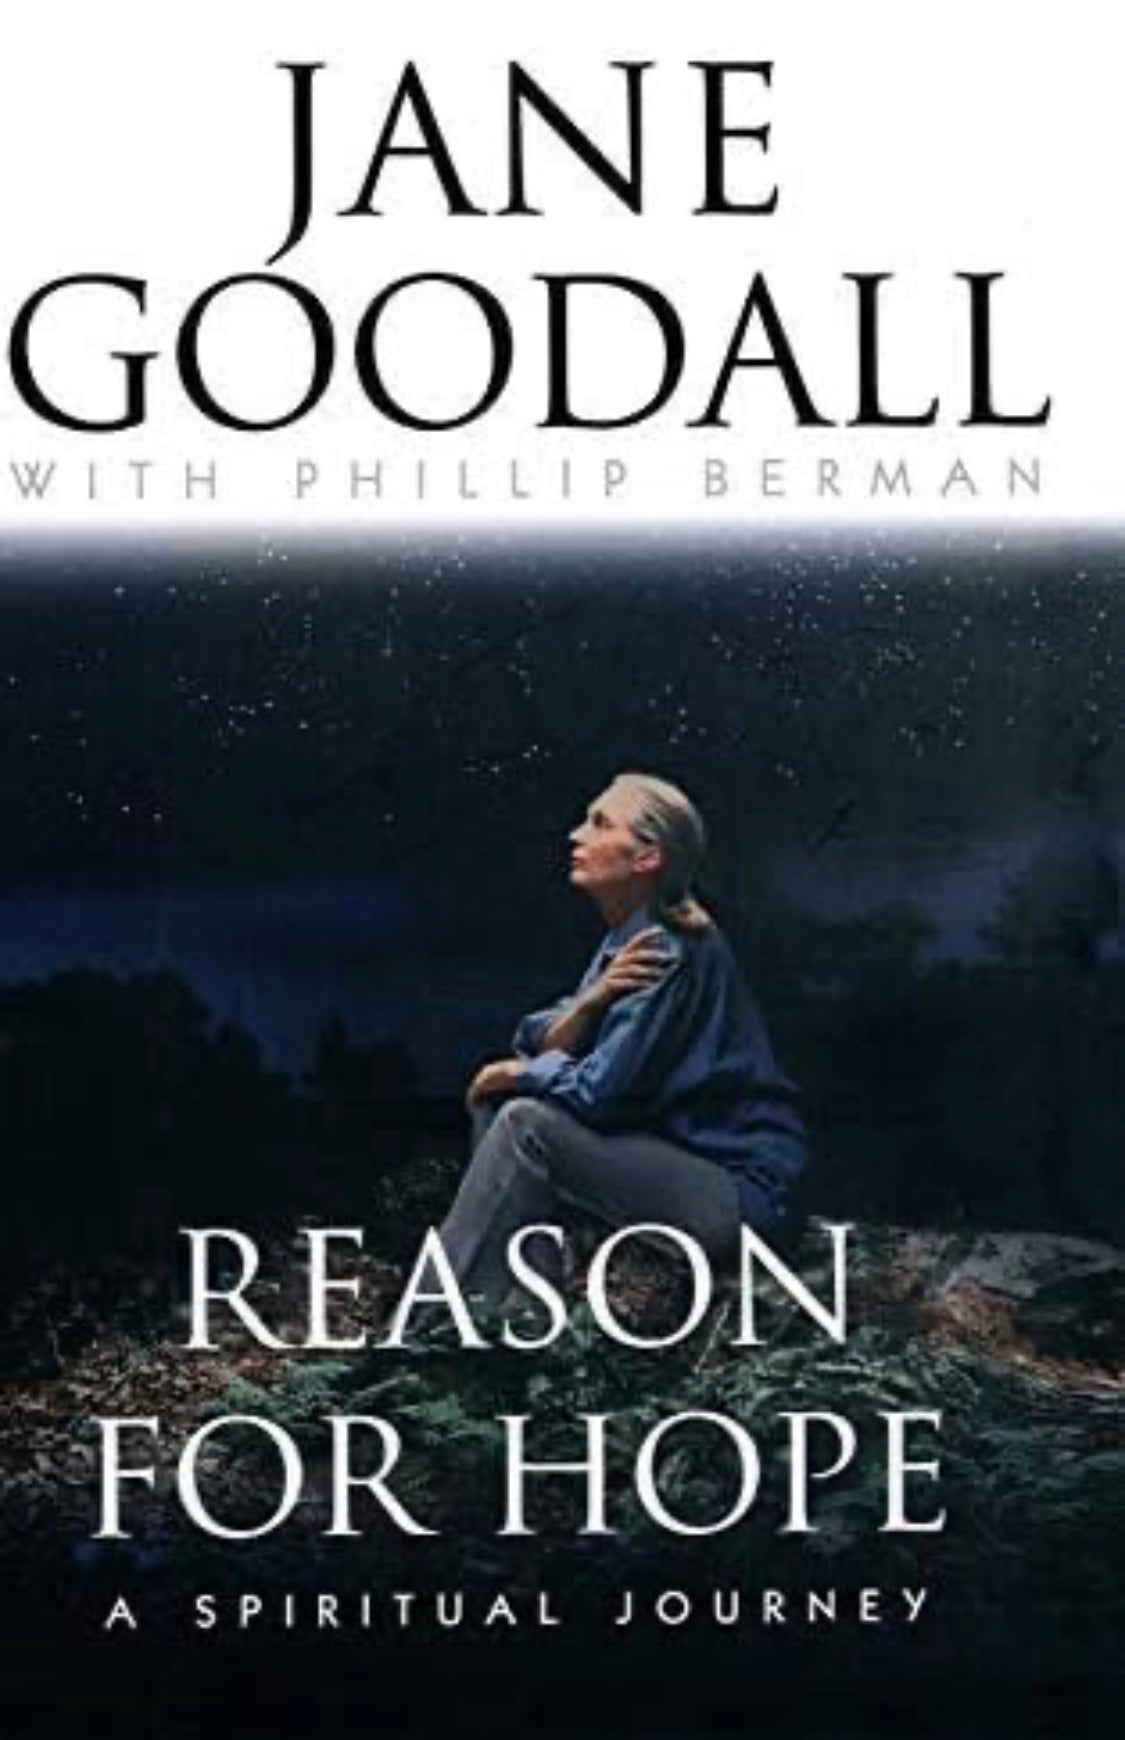 Reason for Hope: Jane Goodall - A Spiritual Journey